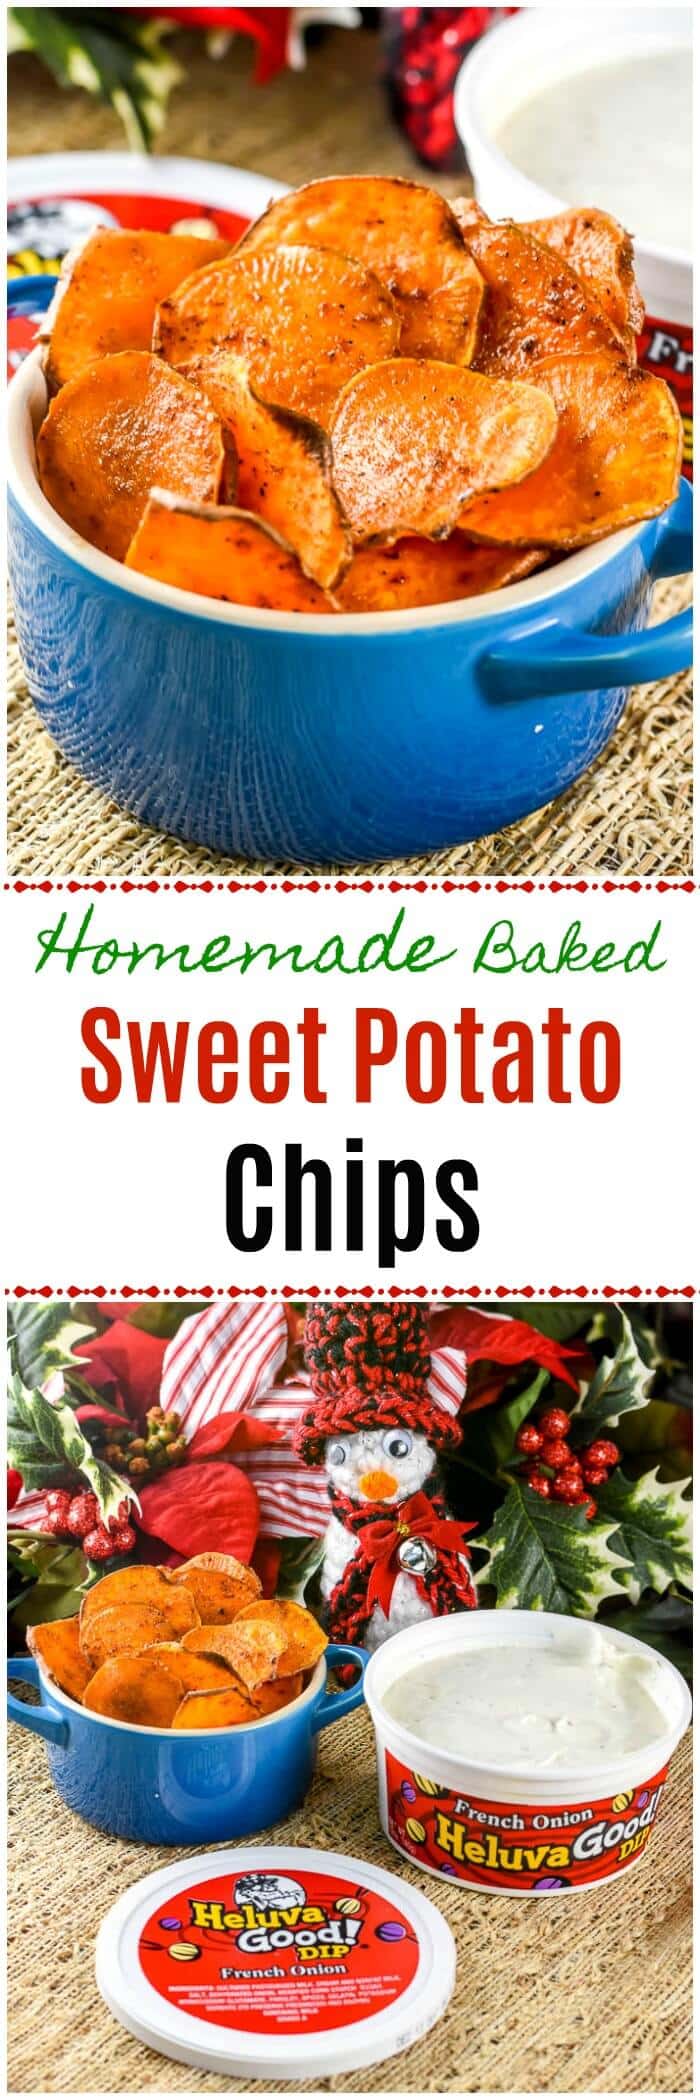 Homemade Baked Sweet Potato Chips Recipe Paleo